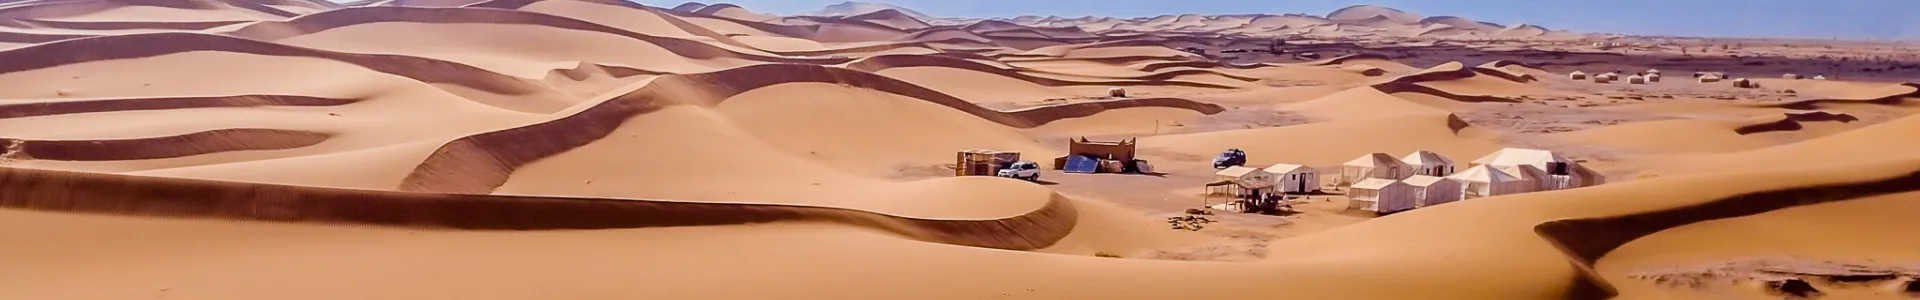 obozowisko na pustyni Erg Chigaga